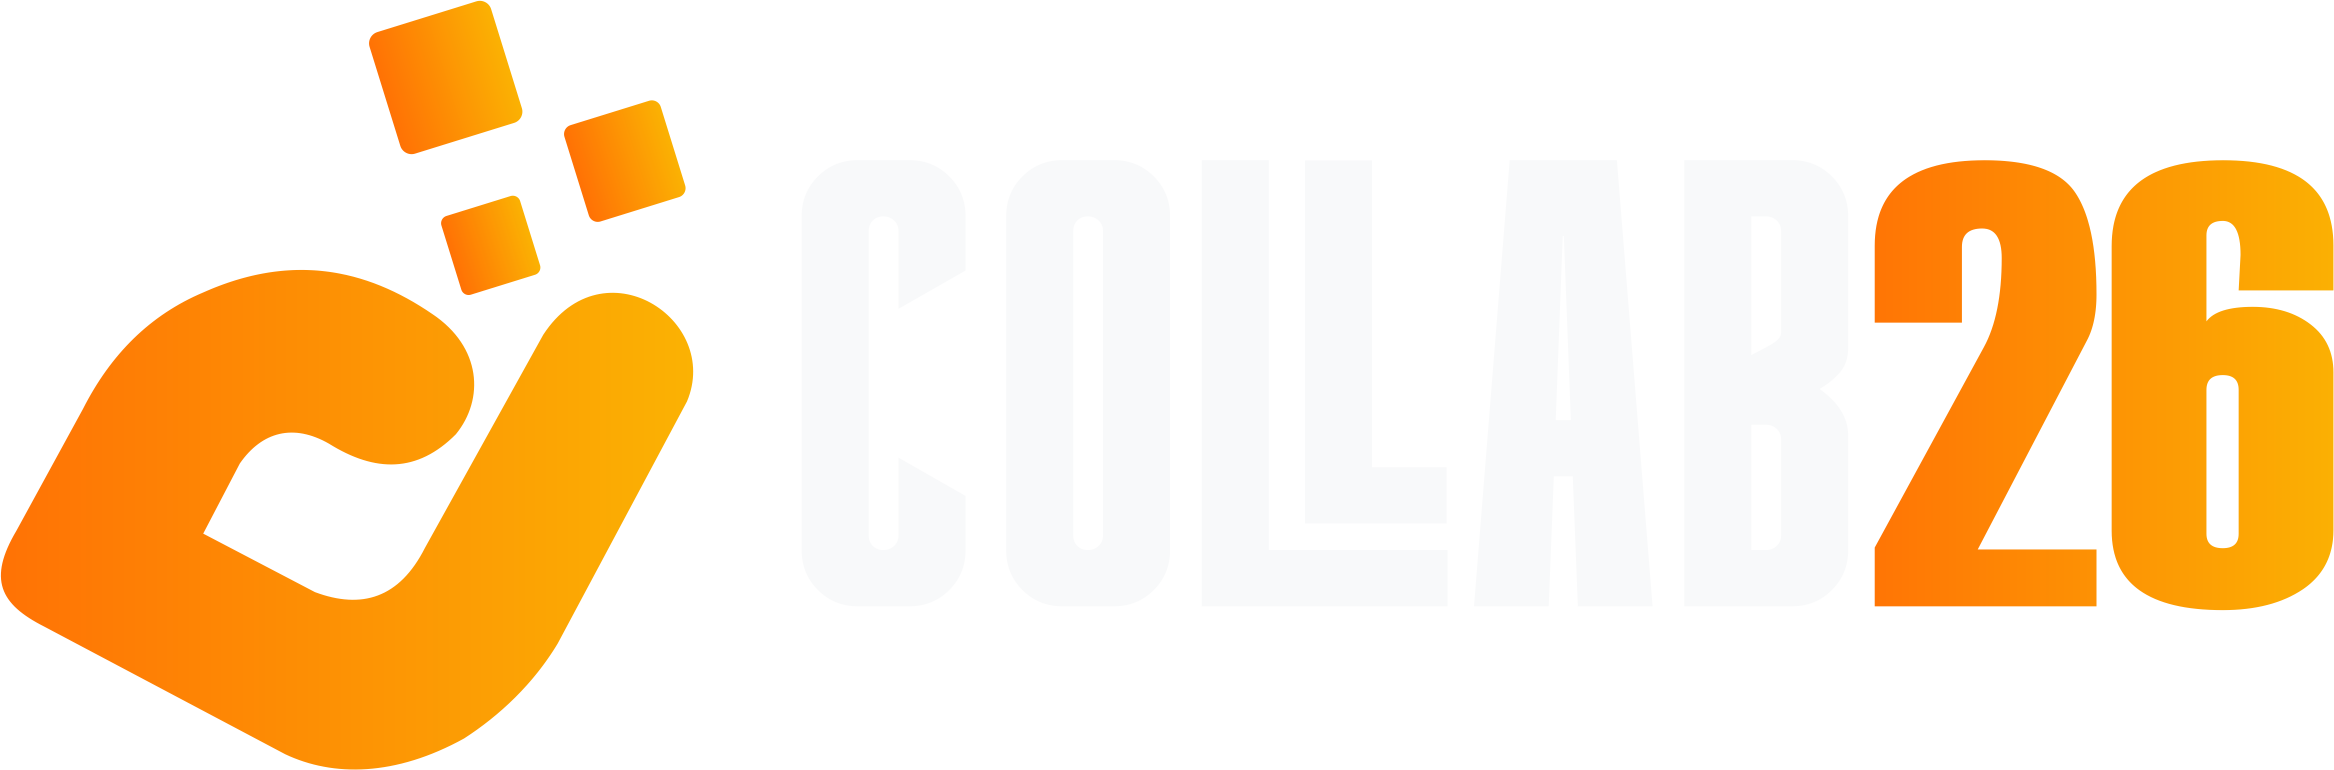 COLLAB 26